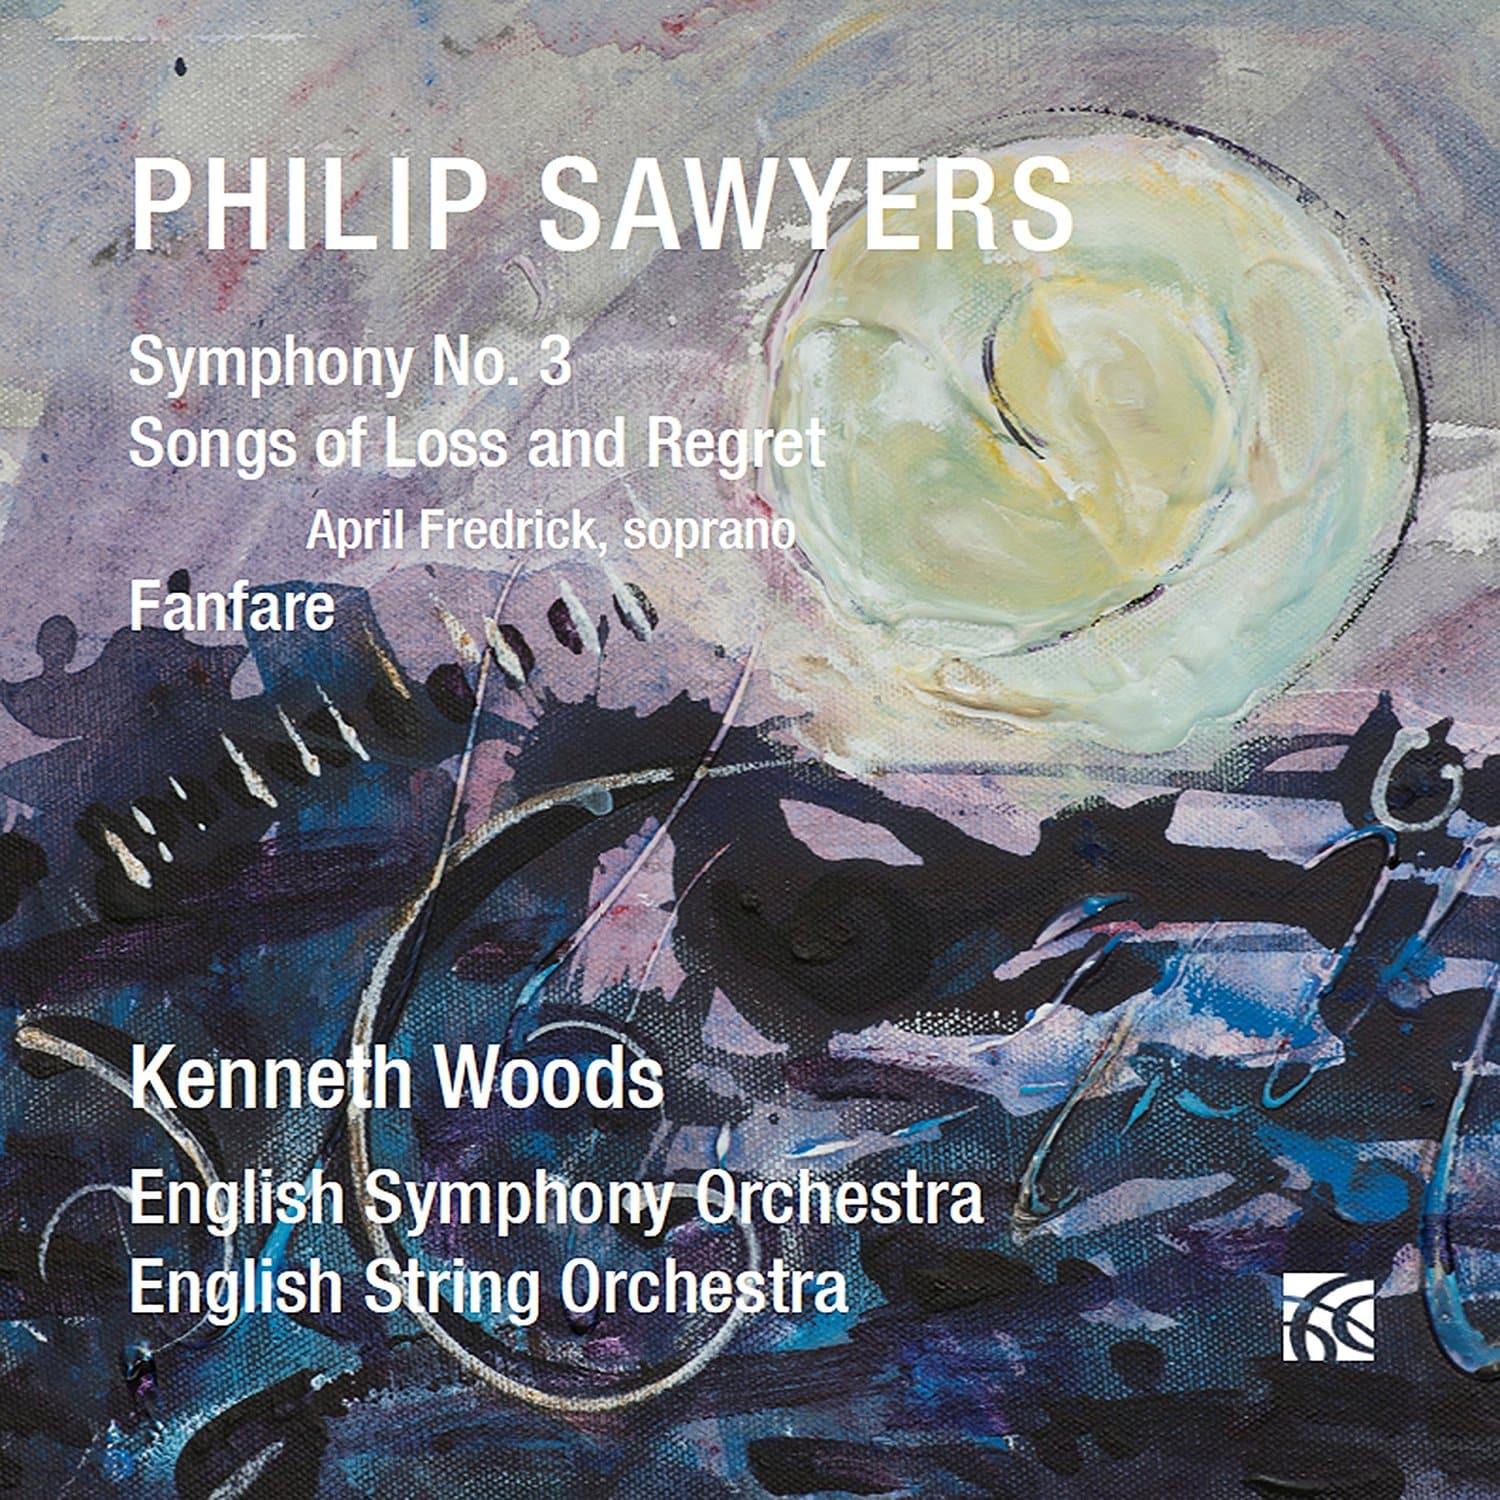 Musical Opinion on Sawyers’ Third Symphony World Premiere